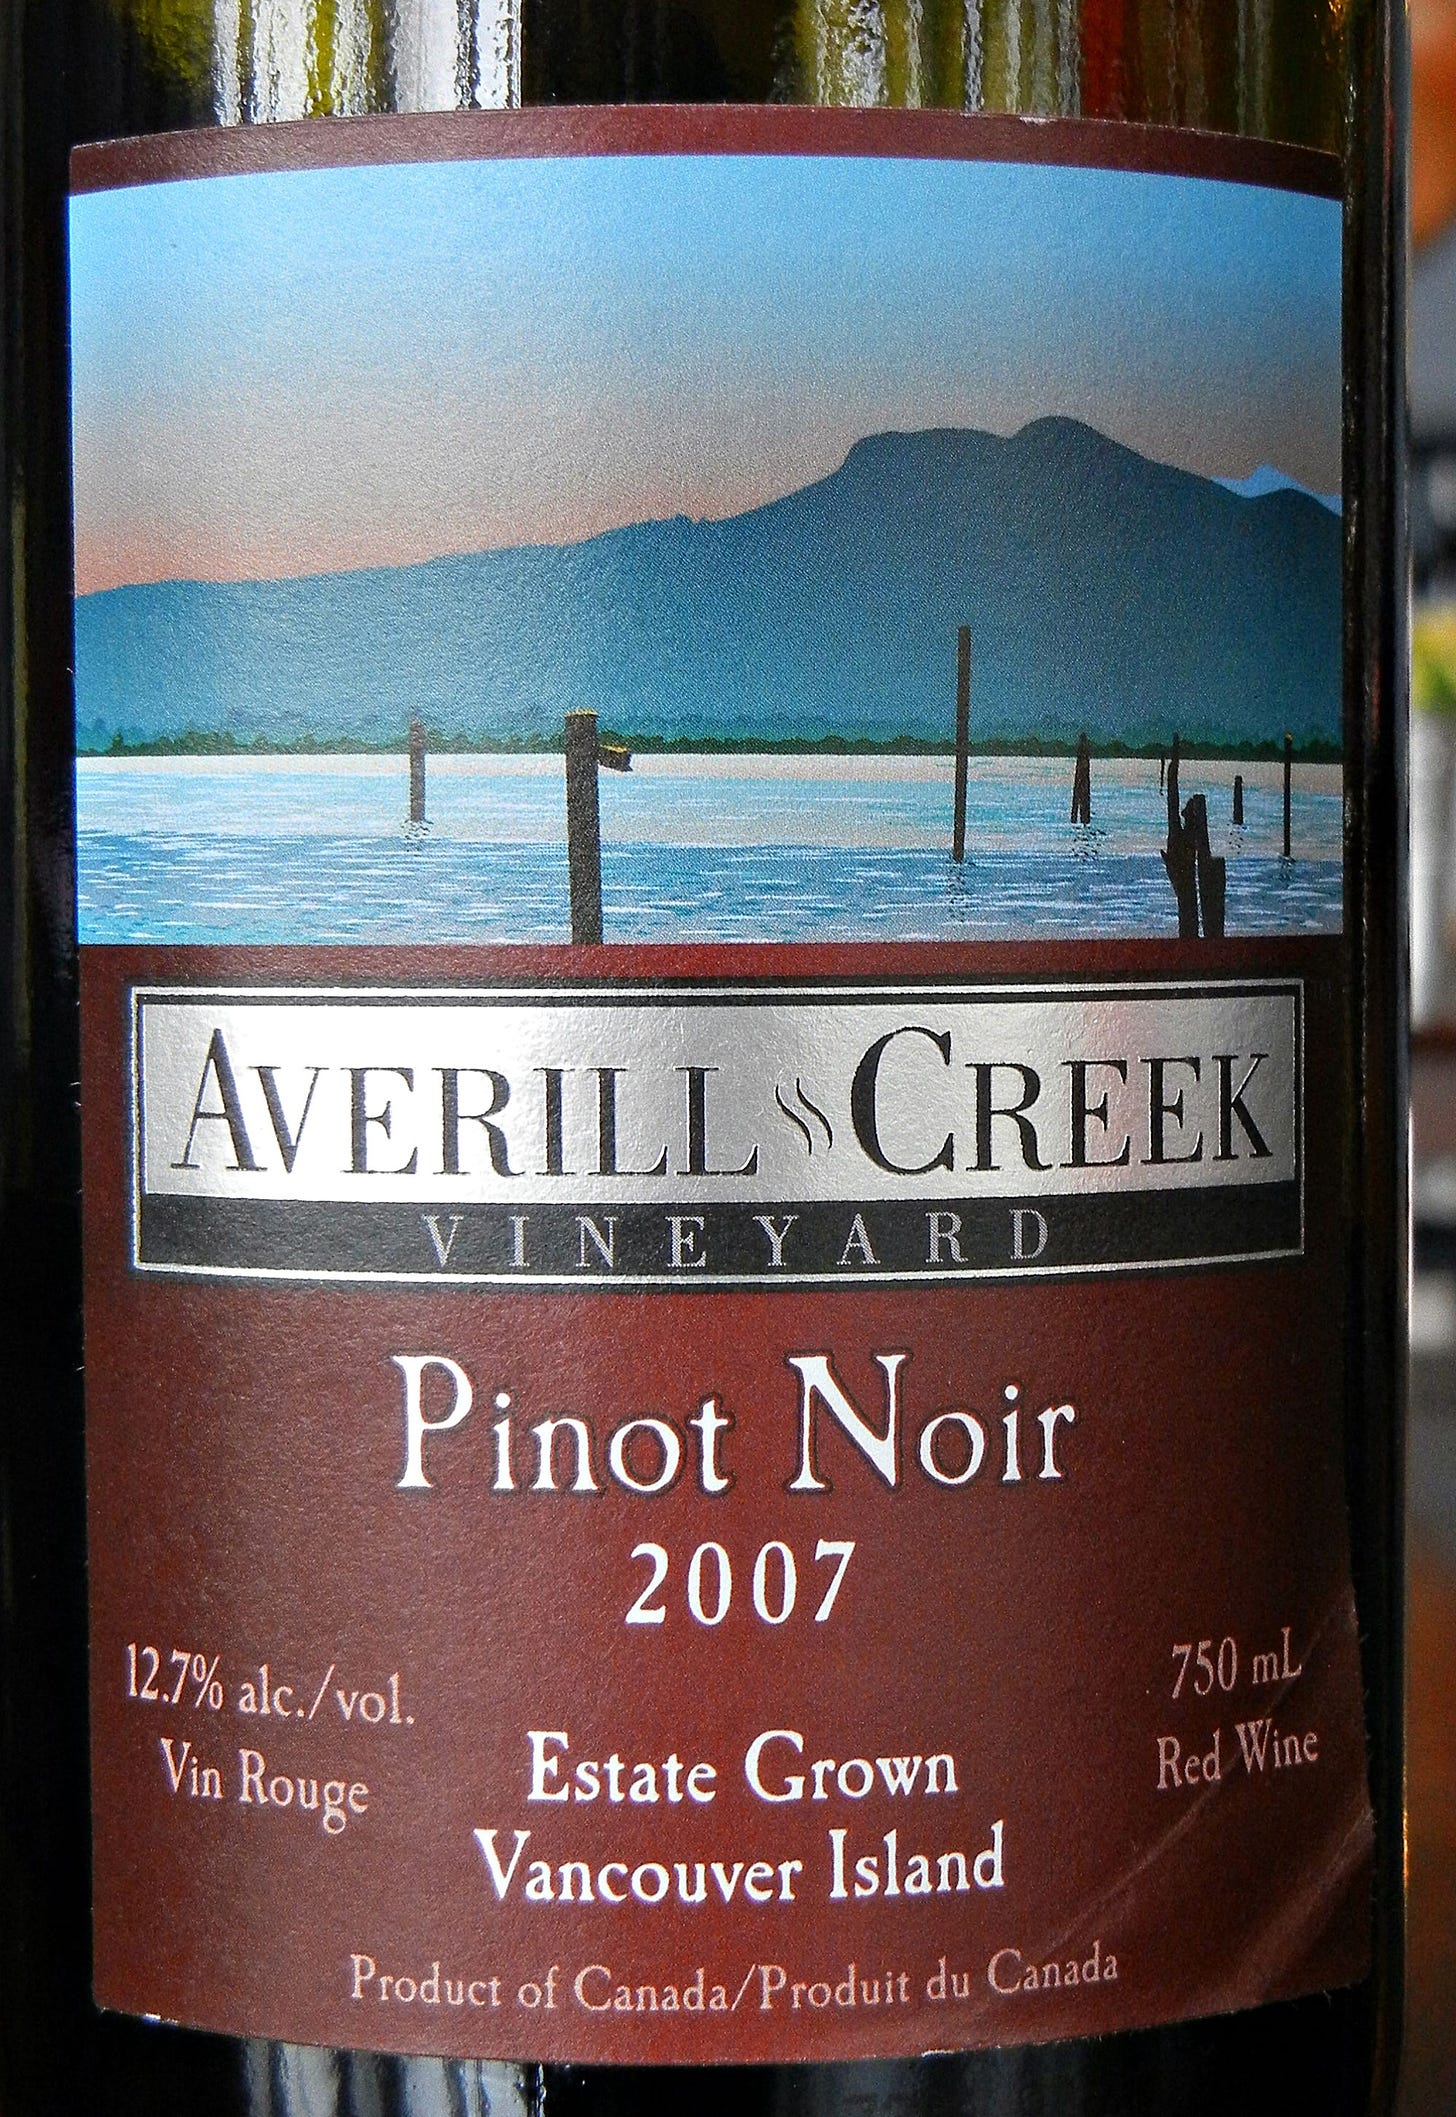 Averill Creek Pinot Noir 2007 Label - BC Pinot Noir Tasting Review 24